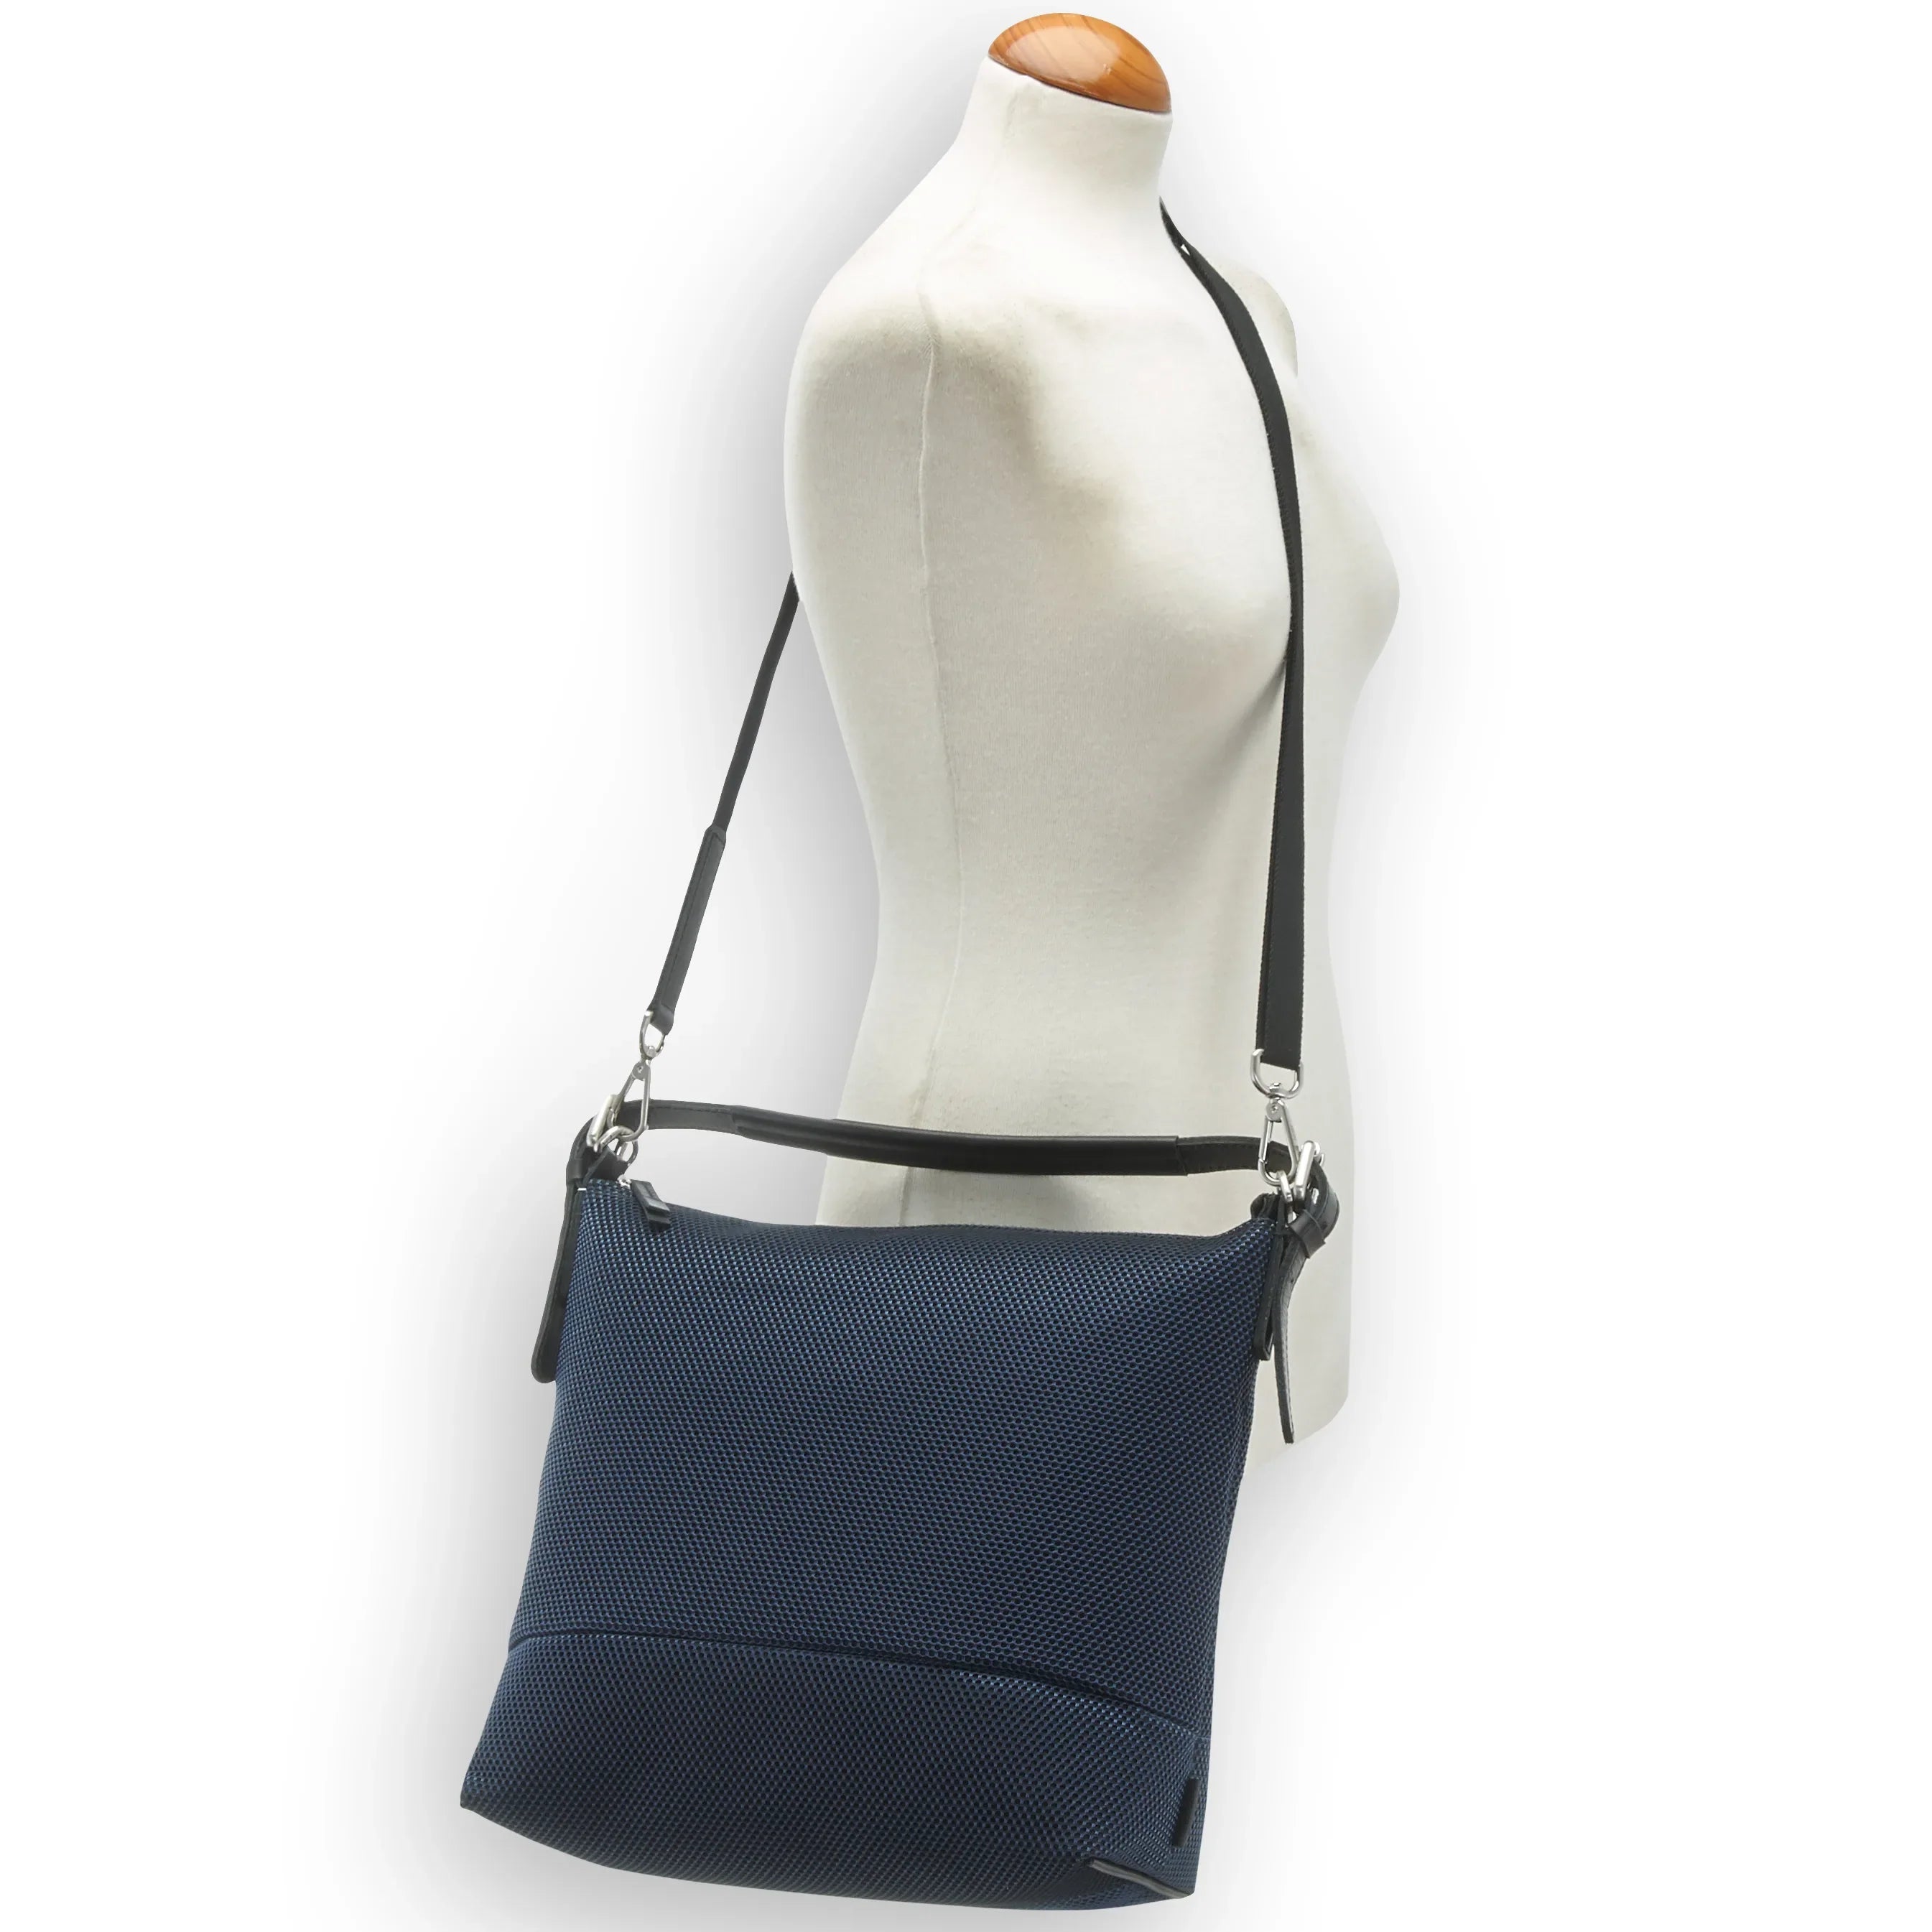 Jost Mesh Hobo Bag sac bandoulière 30 cm - bleu